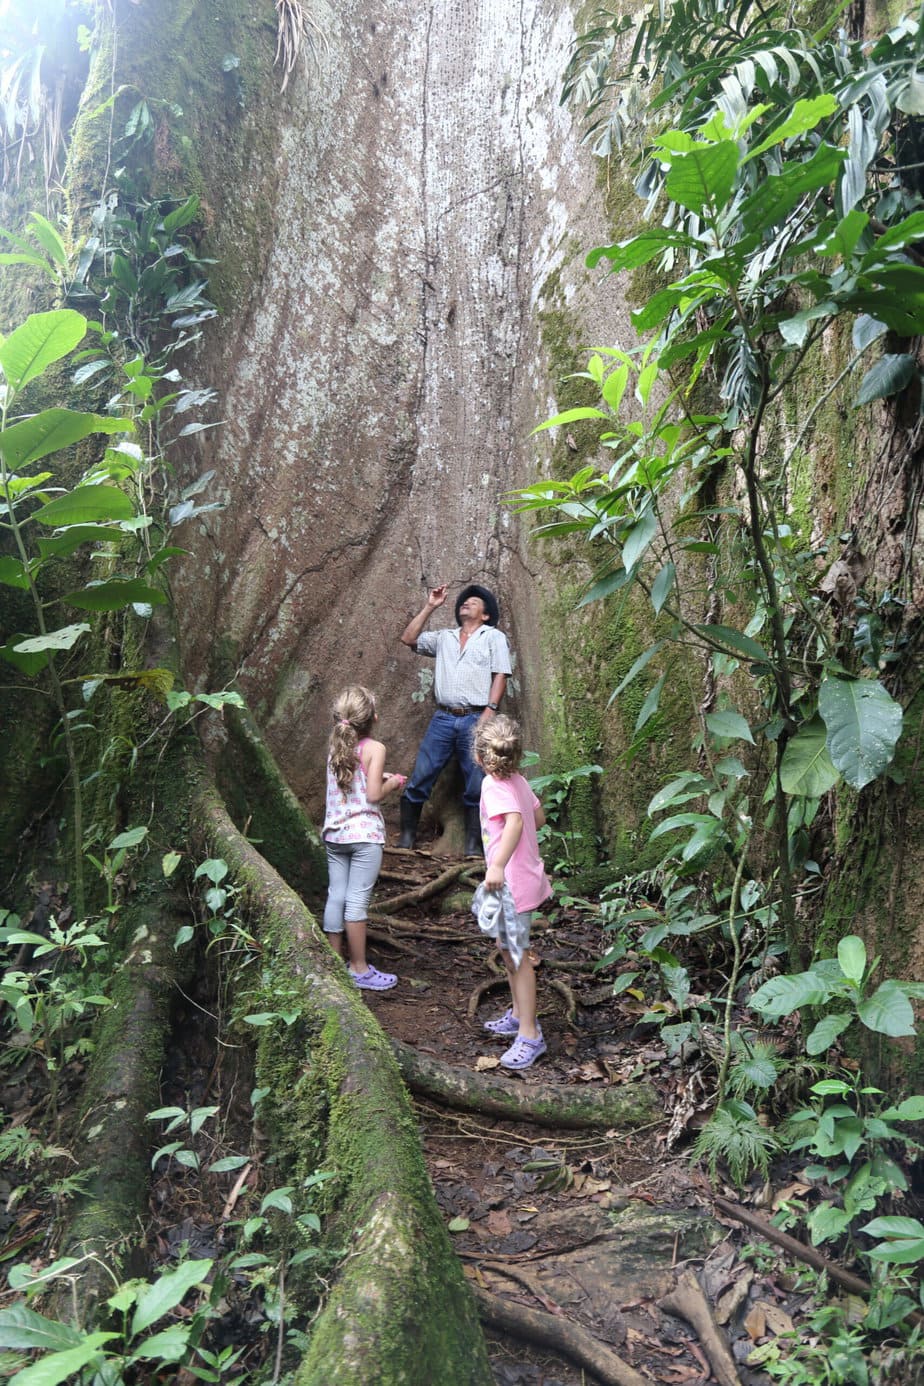 Visit Costa Rica’s Oldest Tree